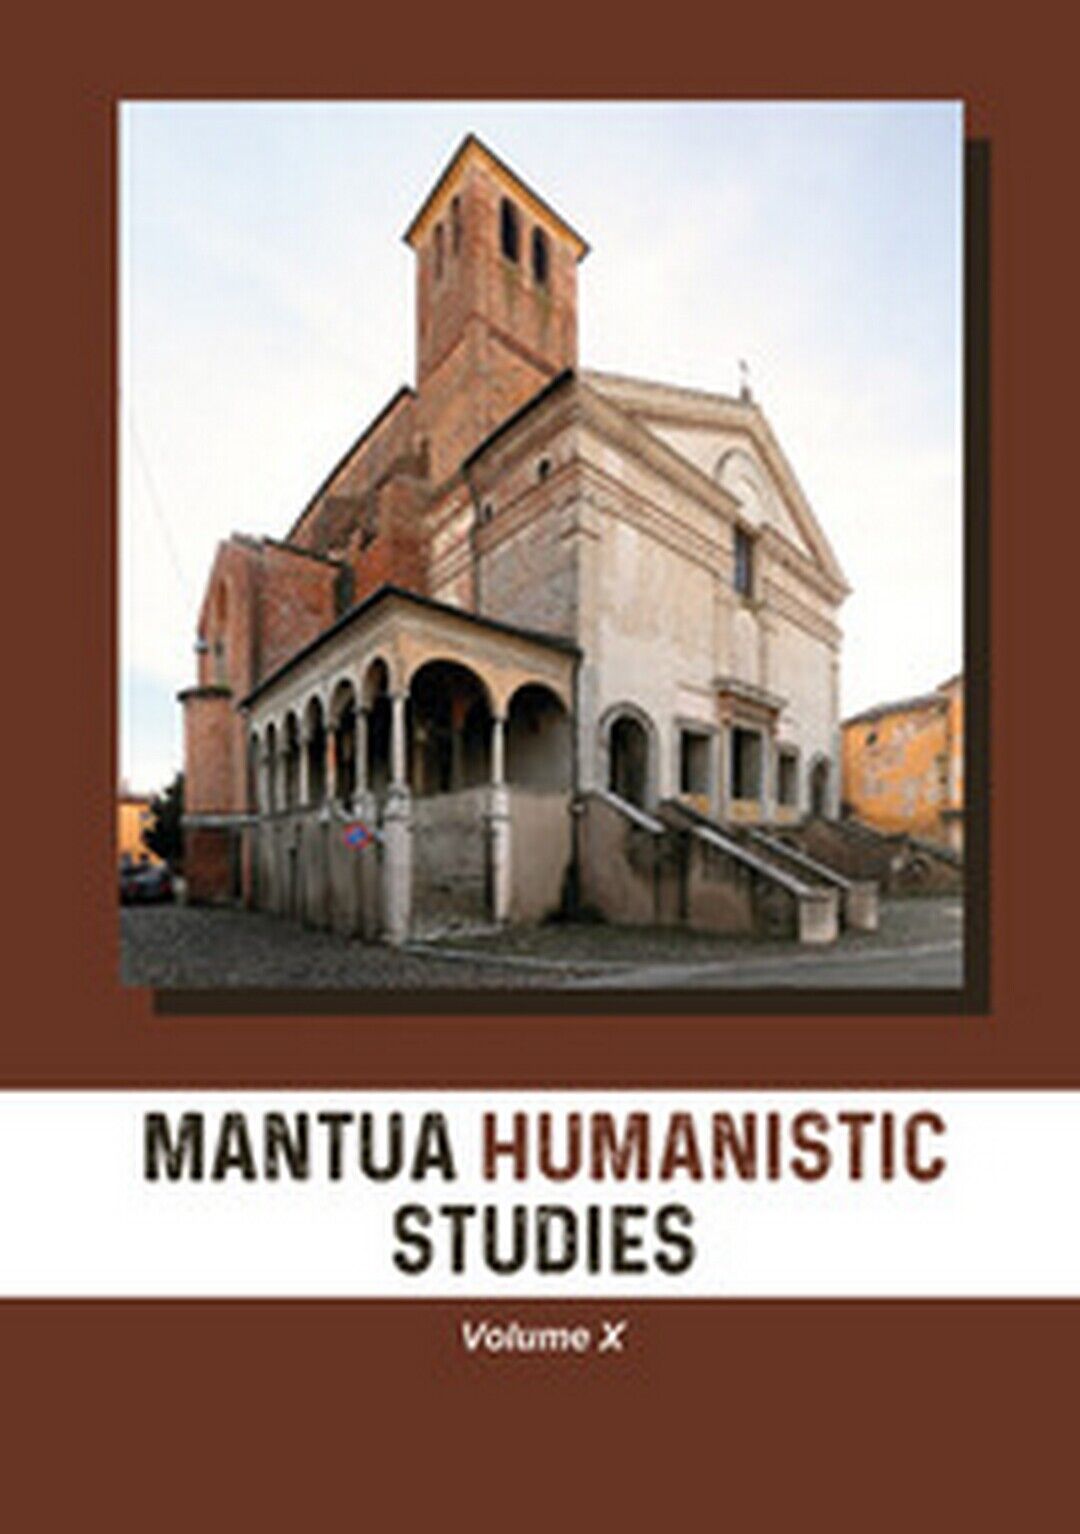 Mantua humanistic studies Vol.10  di W. d'Avanzo,  2020,  Universitas Studiorum